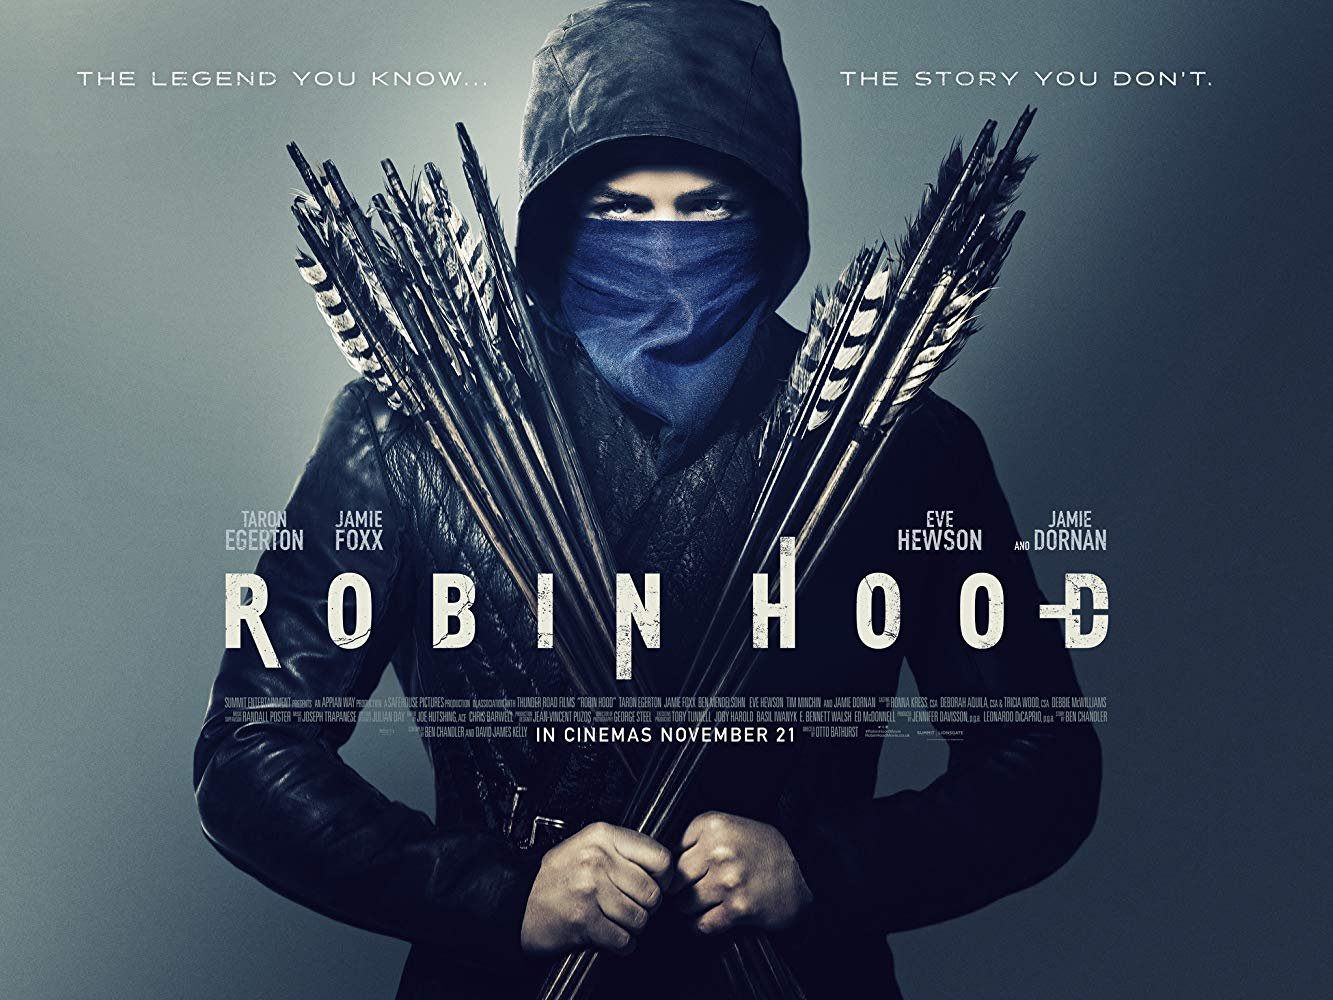 Robin Hood 2018 Full Movie Online In Hd Quality